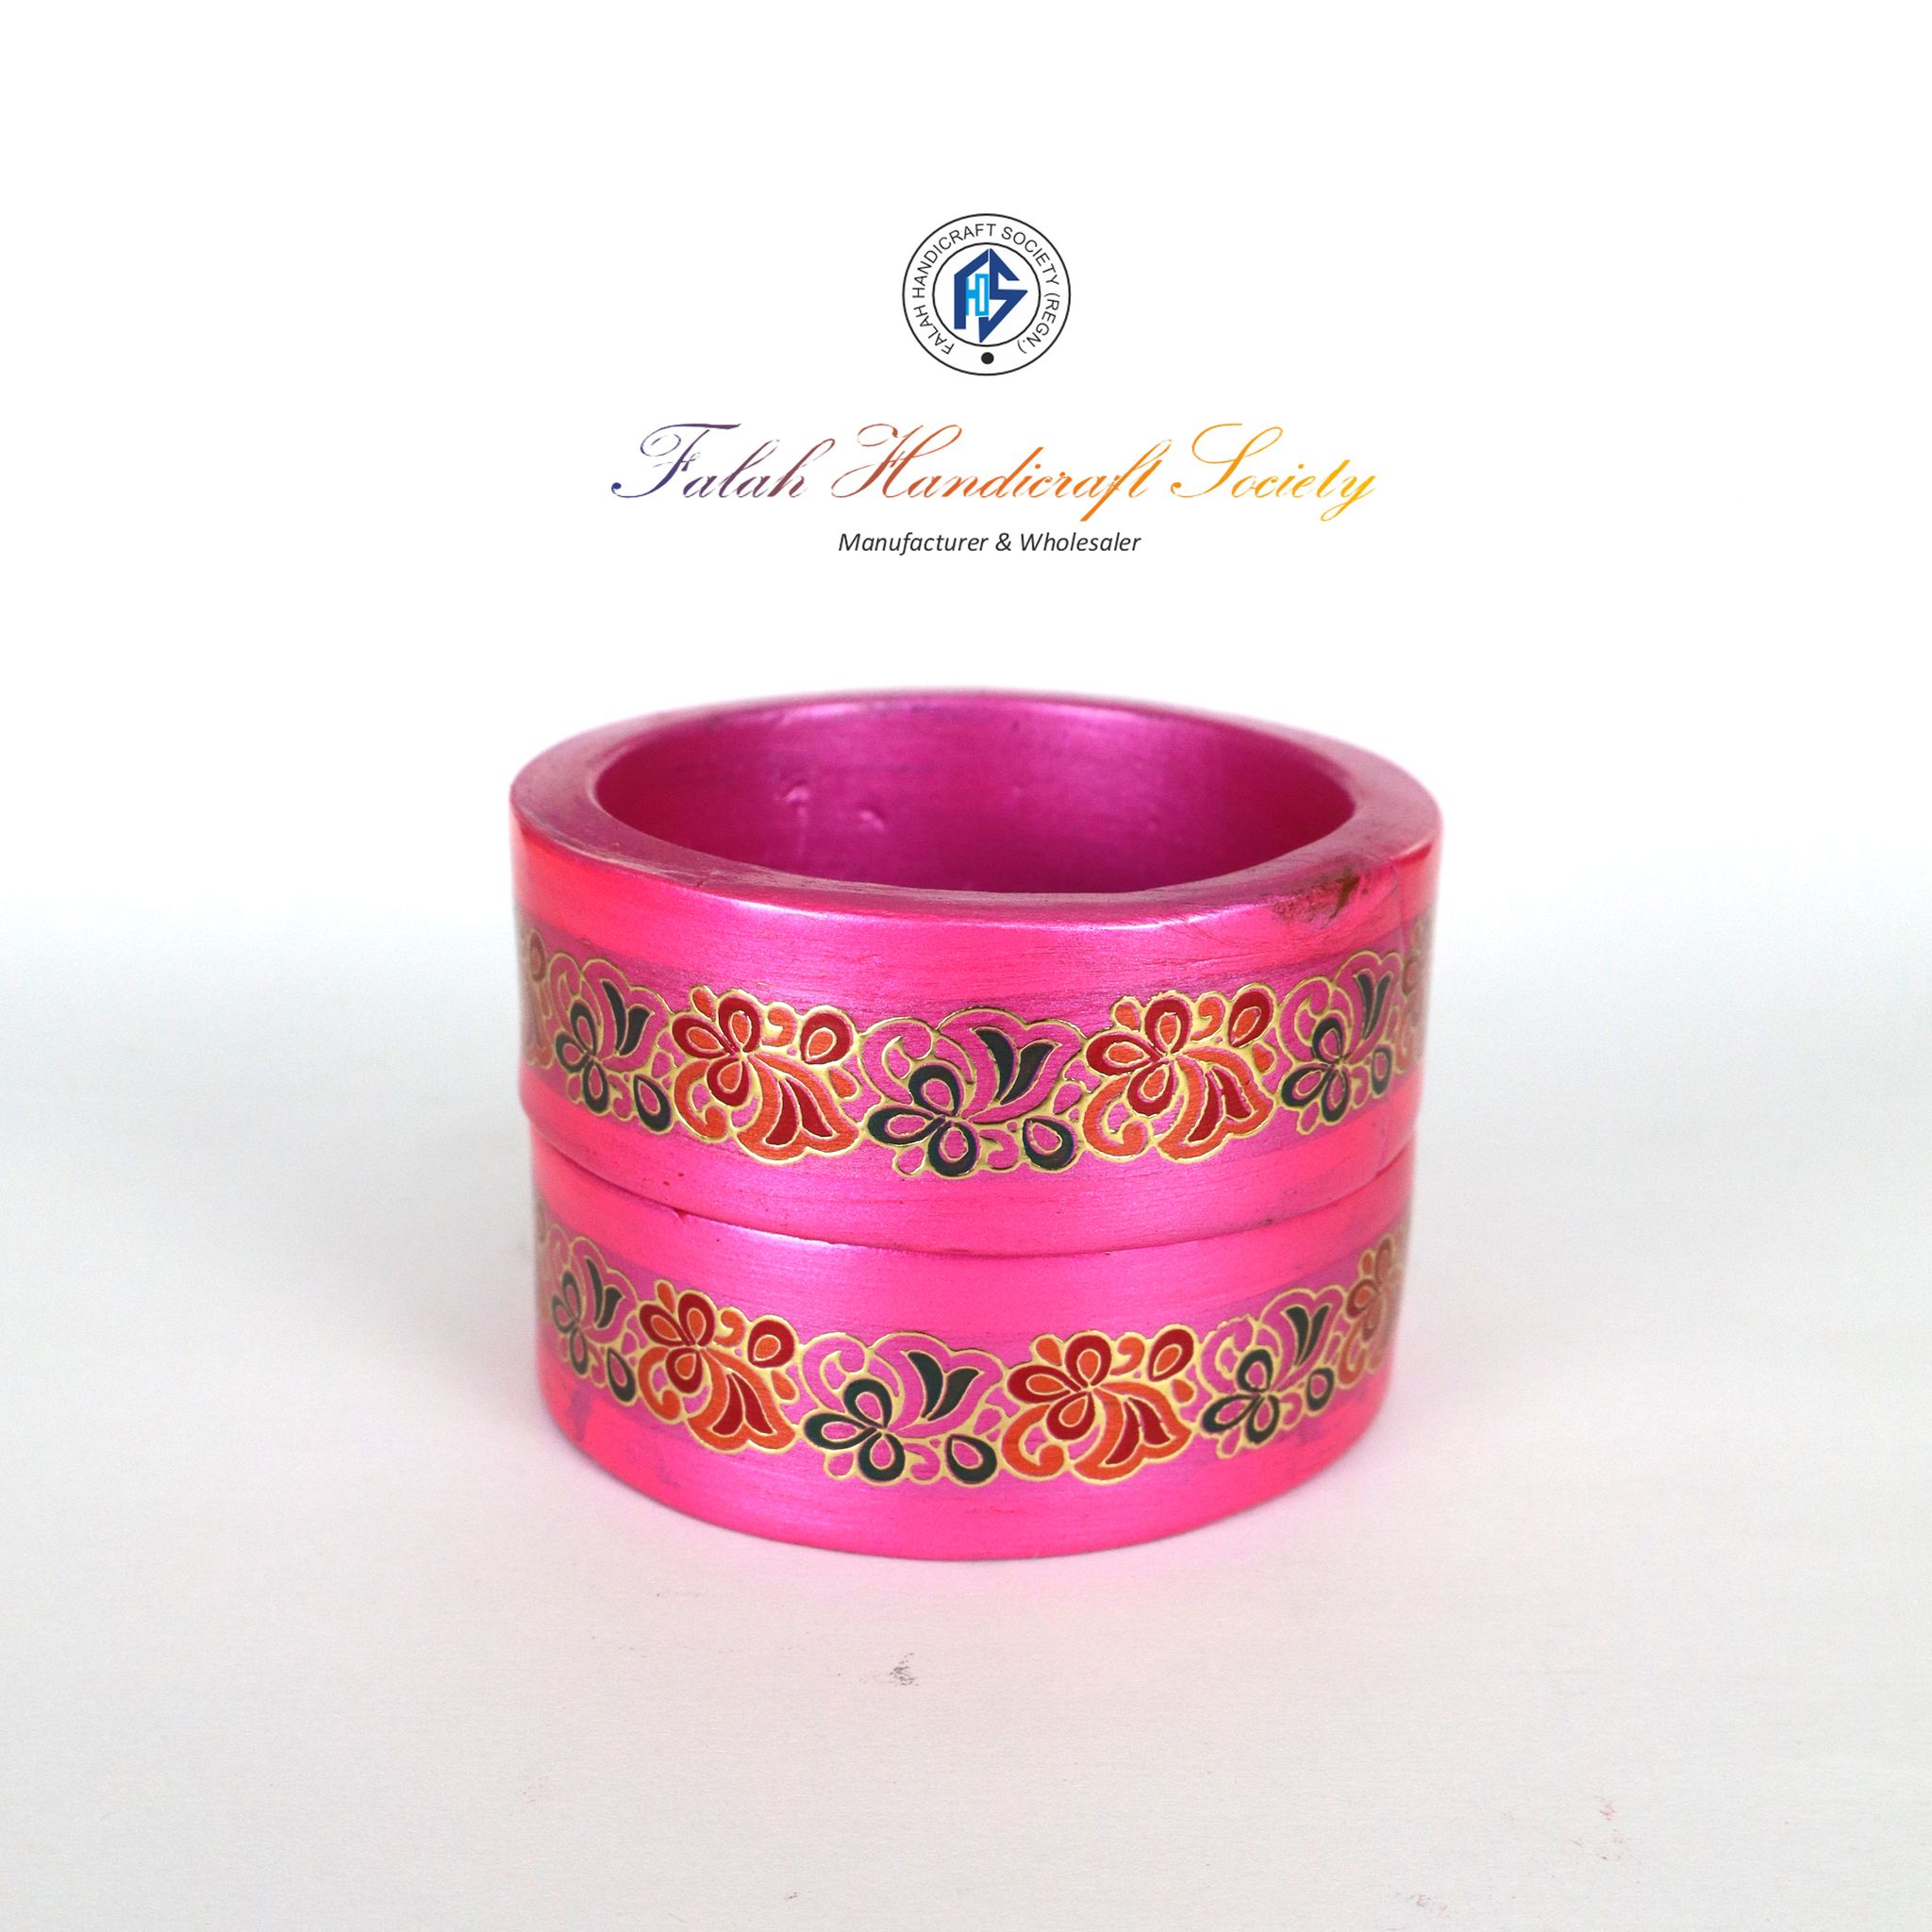 FHS Traditional Handmade Flowers Design - Light Pink